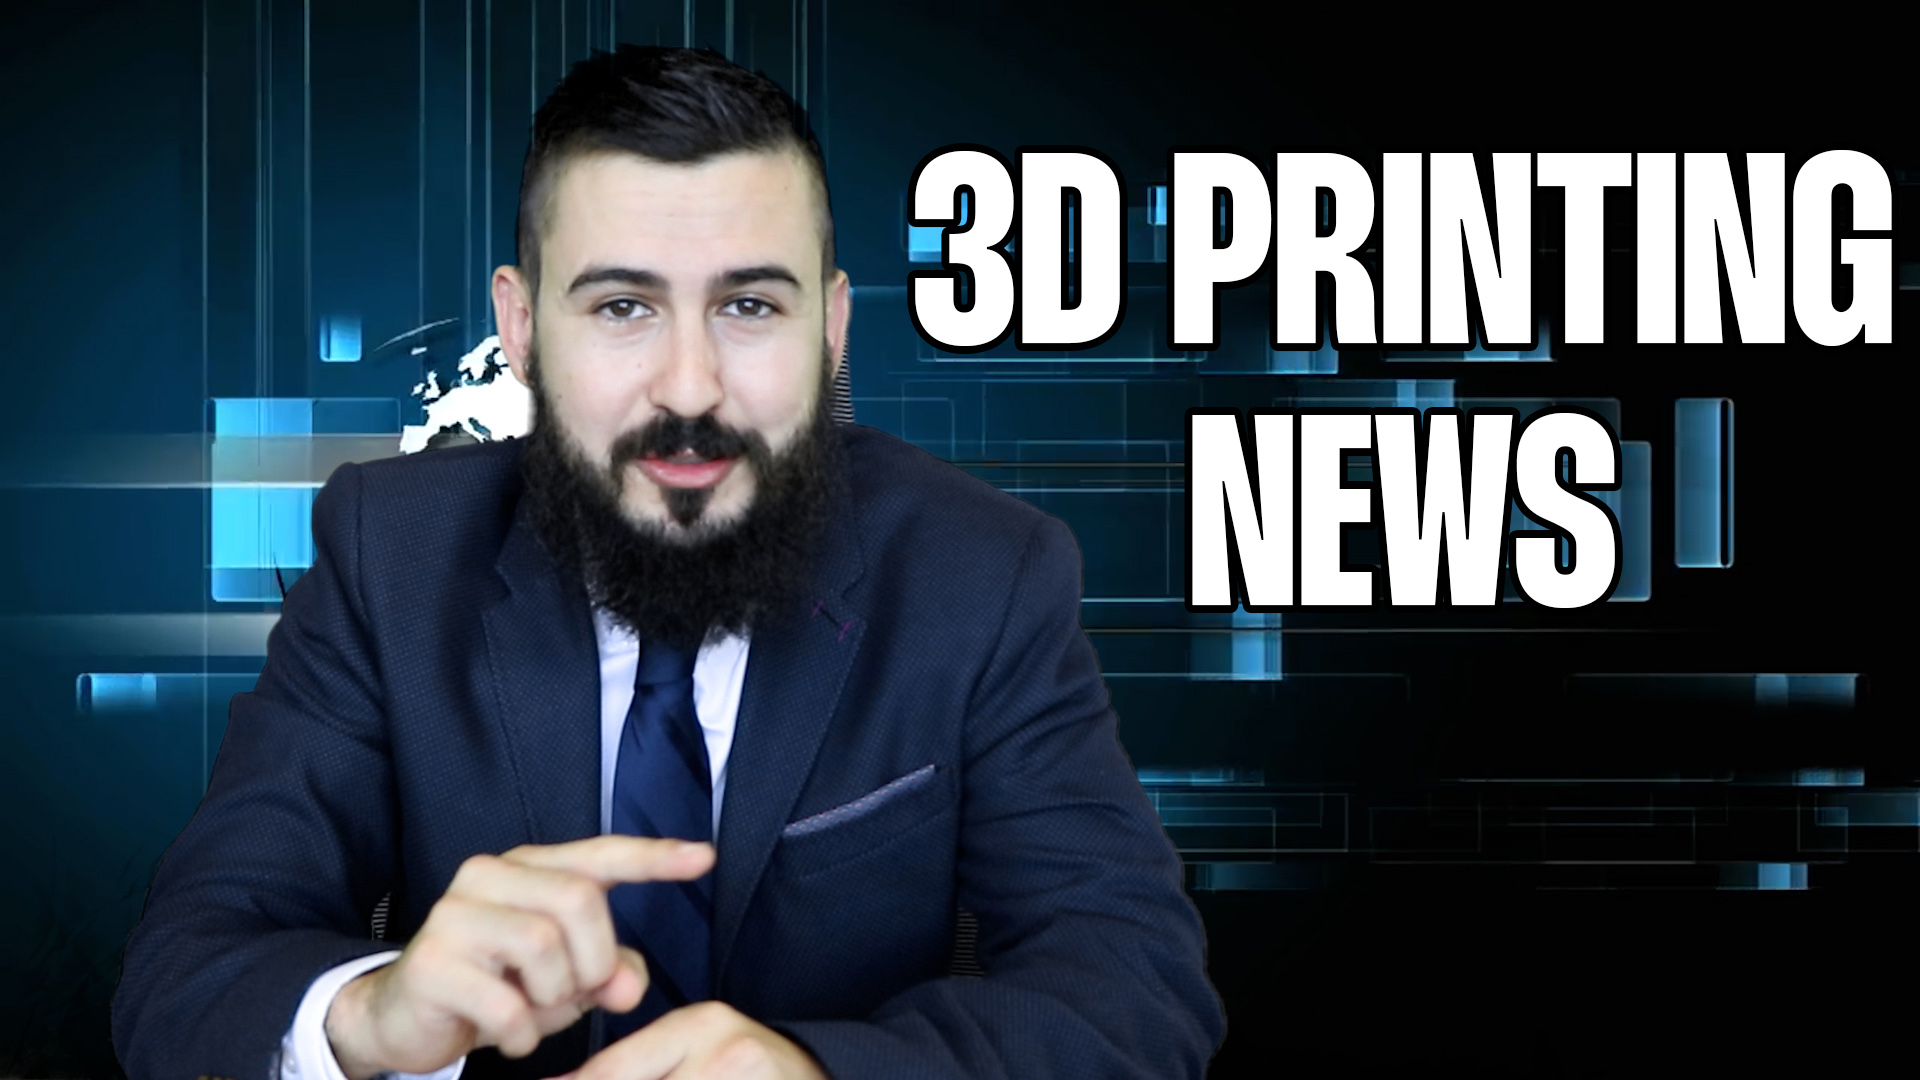 3D Printing News